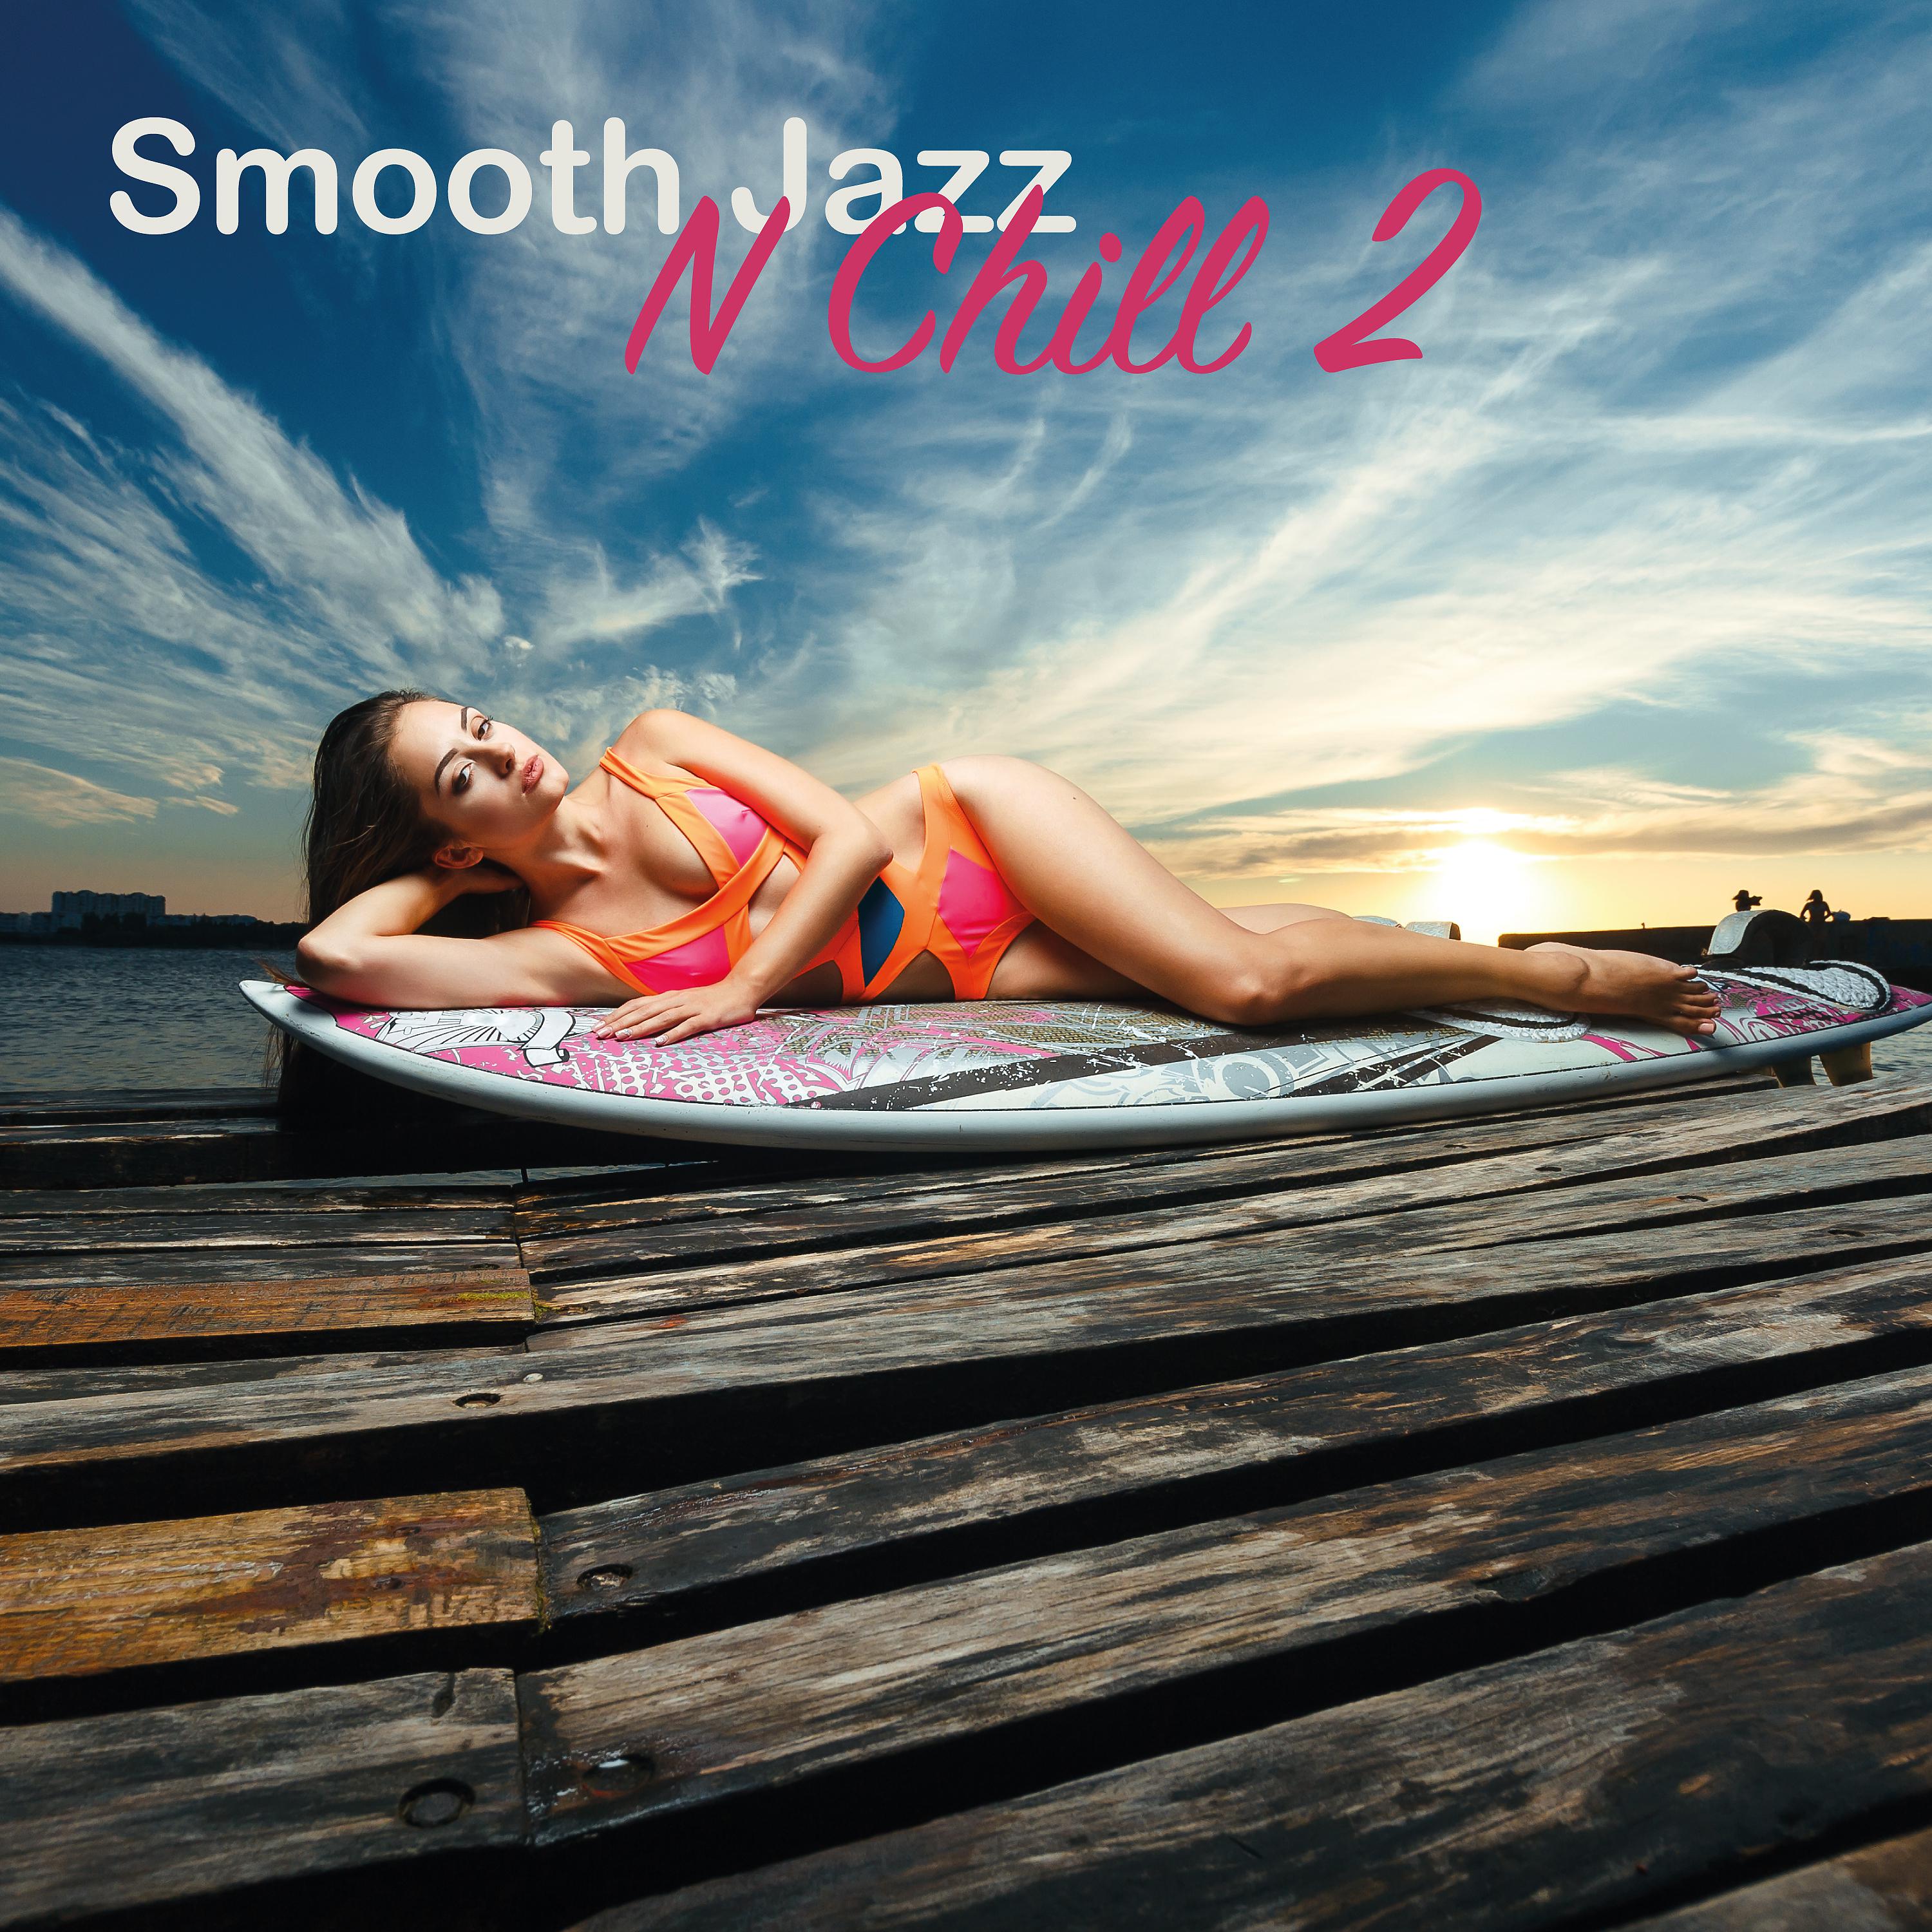 Chill us. Smooth Jazz n Chill. "Smooth Jazz" && ( исполнитель | группа | музыка | Music | Band | artist ) && (фото | photo). Va. Smooth Jazz 2005. Chill мм2.